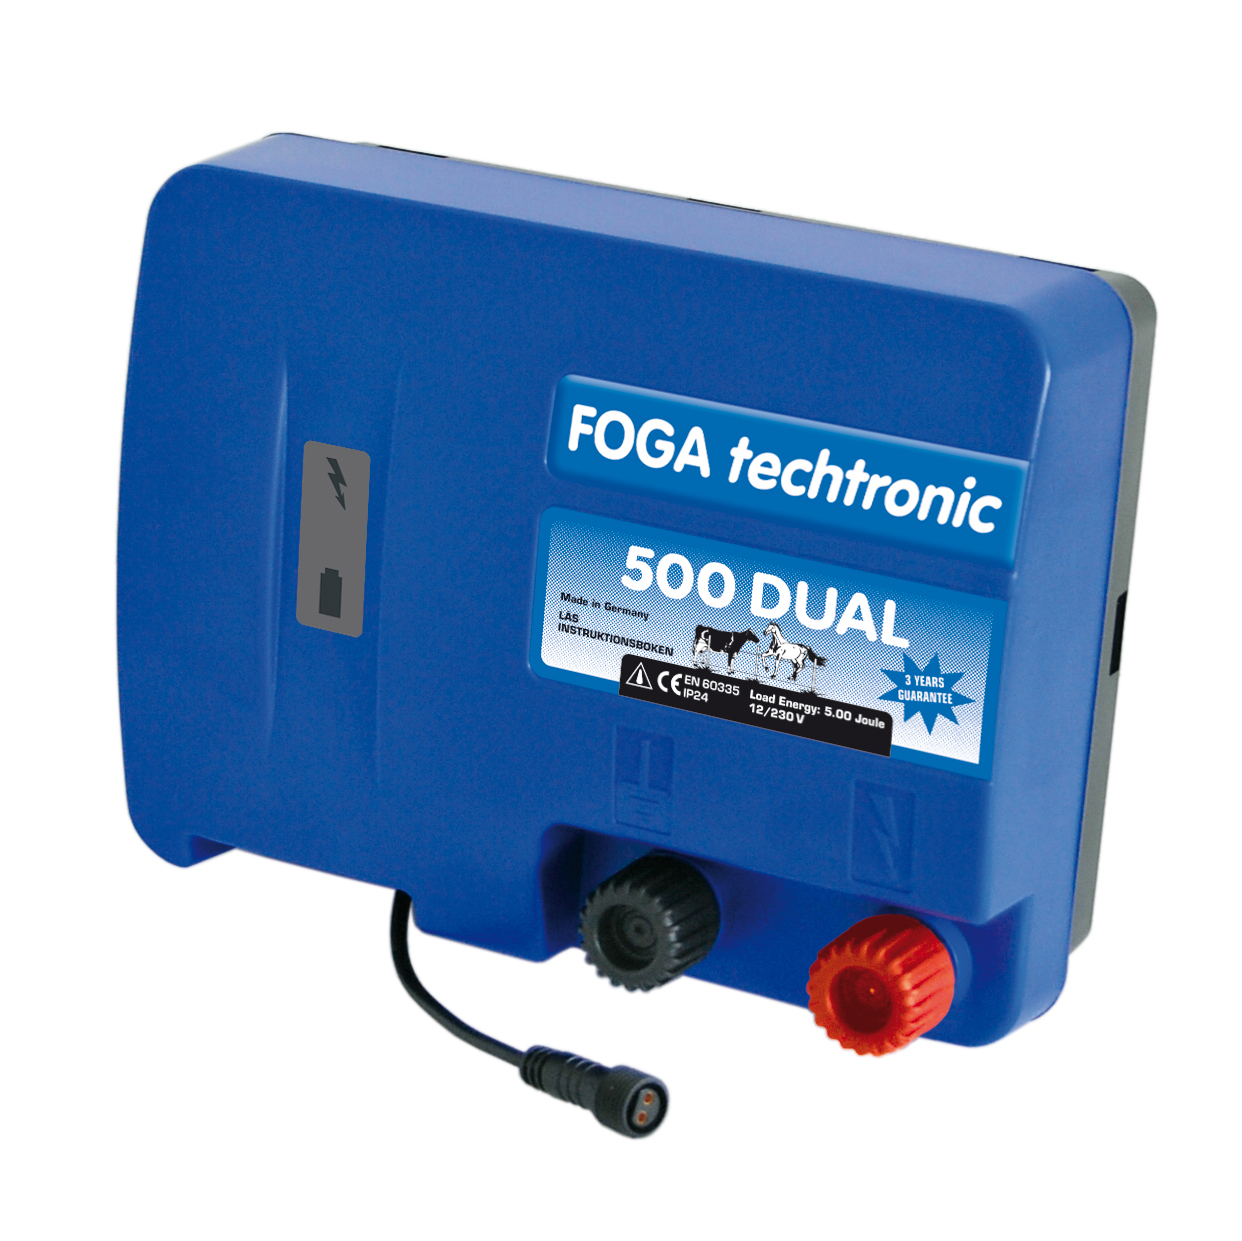 Aggregat Foga Techtronic 500 dual